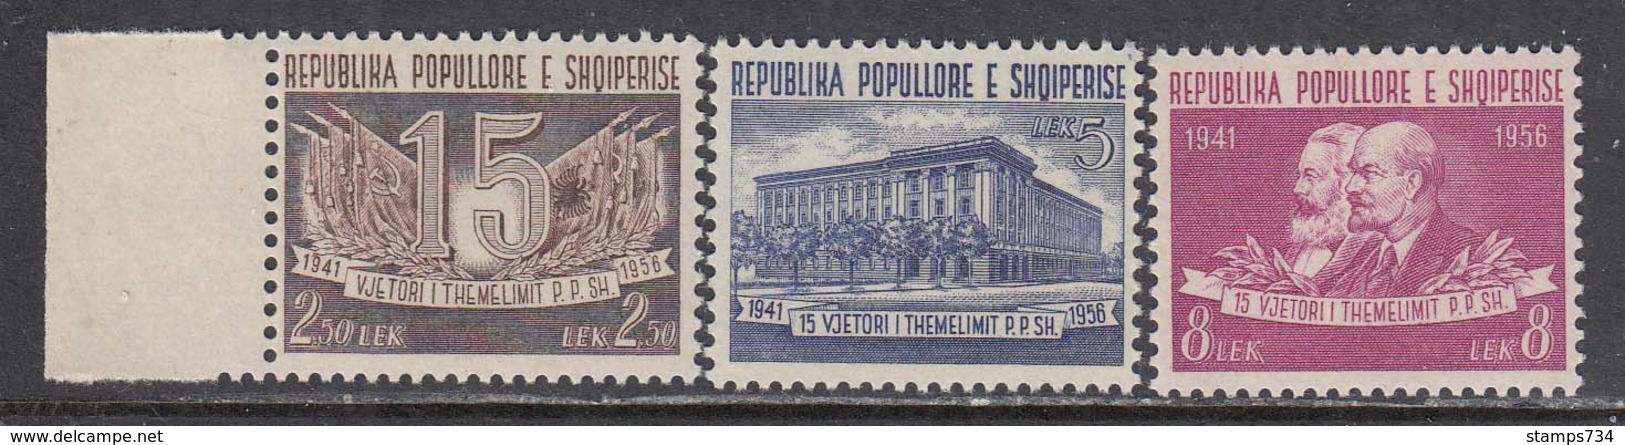 Albania 1957 - 15 Years Albanian Workers'party, Lenin, Karl Marx, Mi-Nr. 543/45, MNH** - Albania